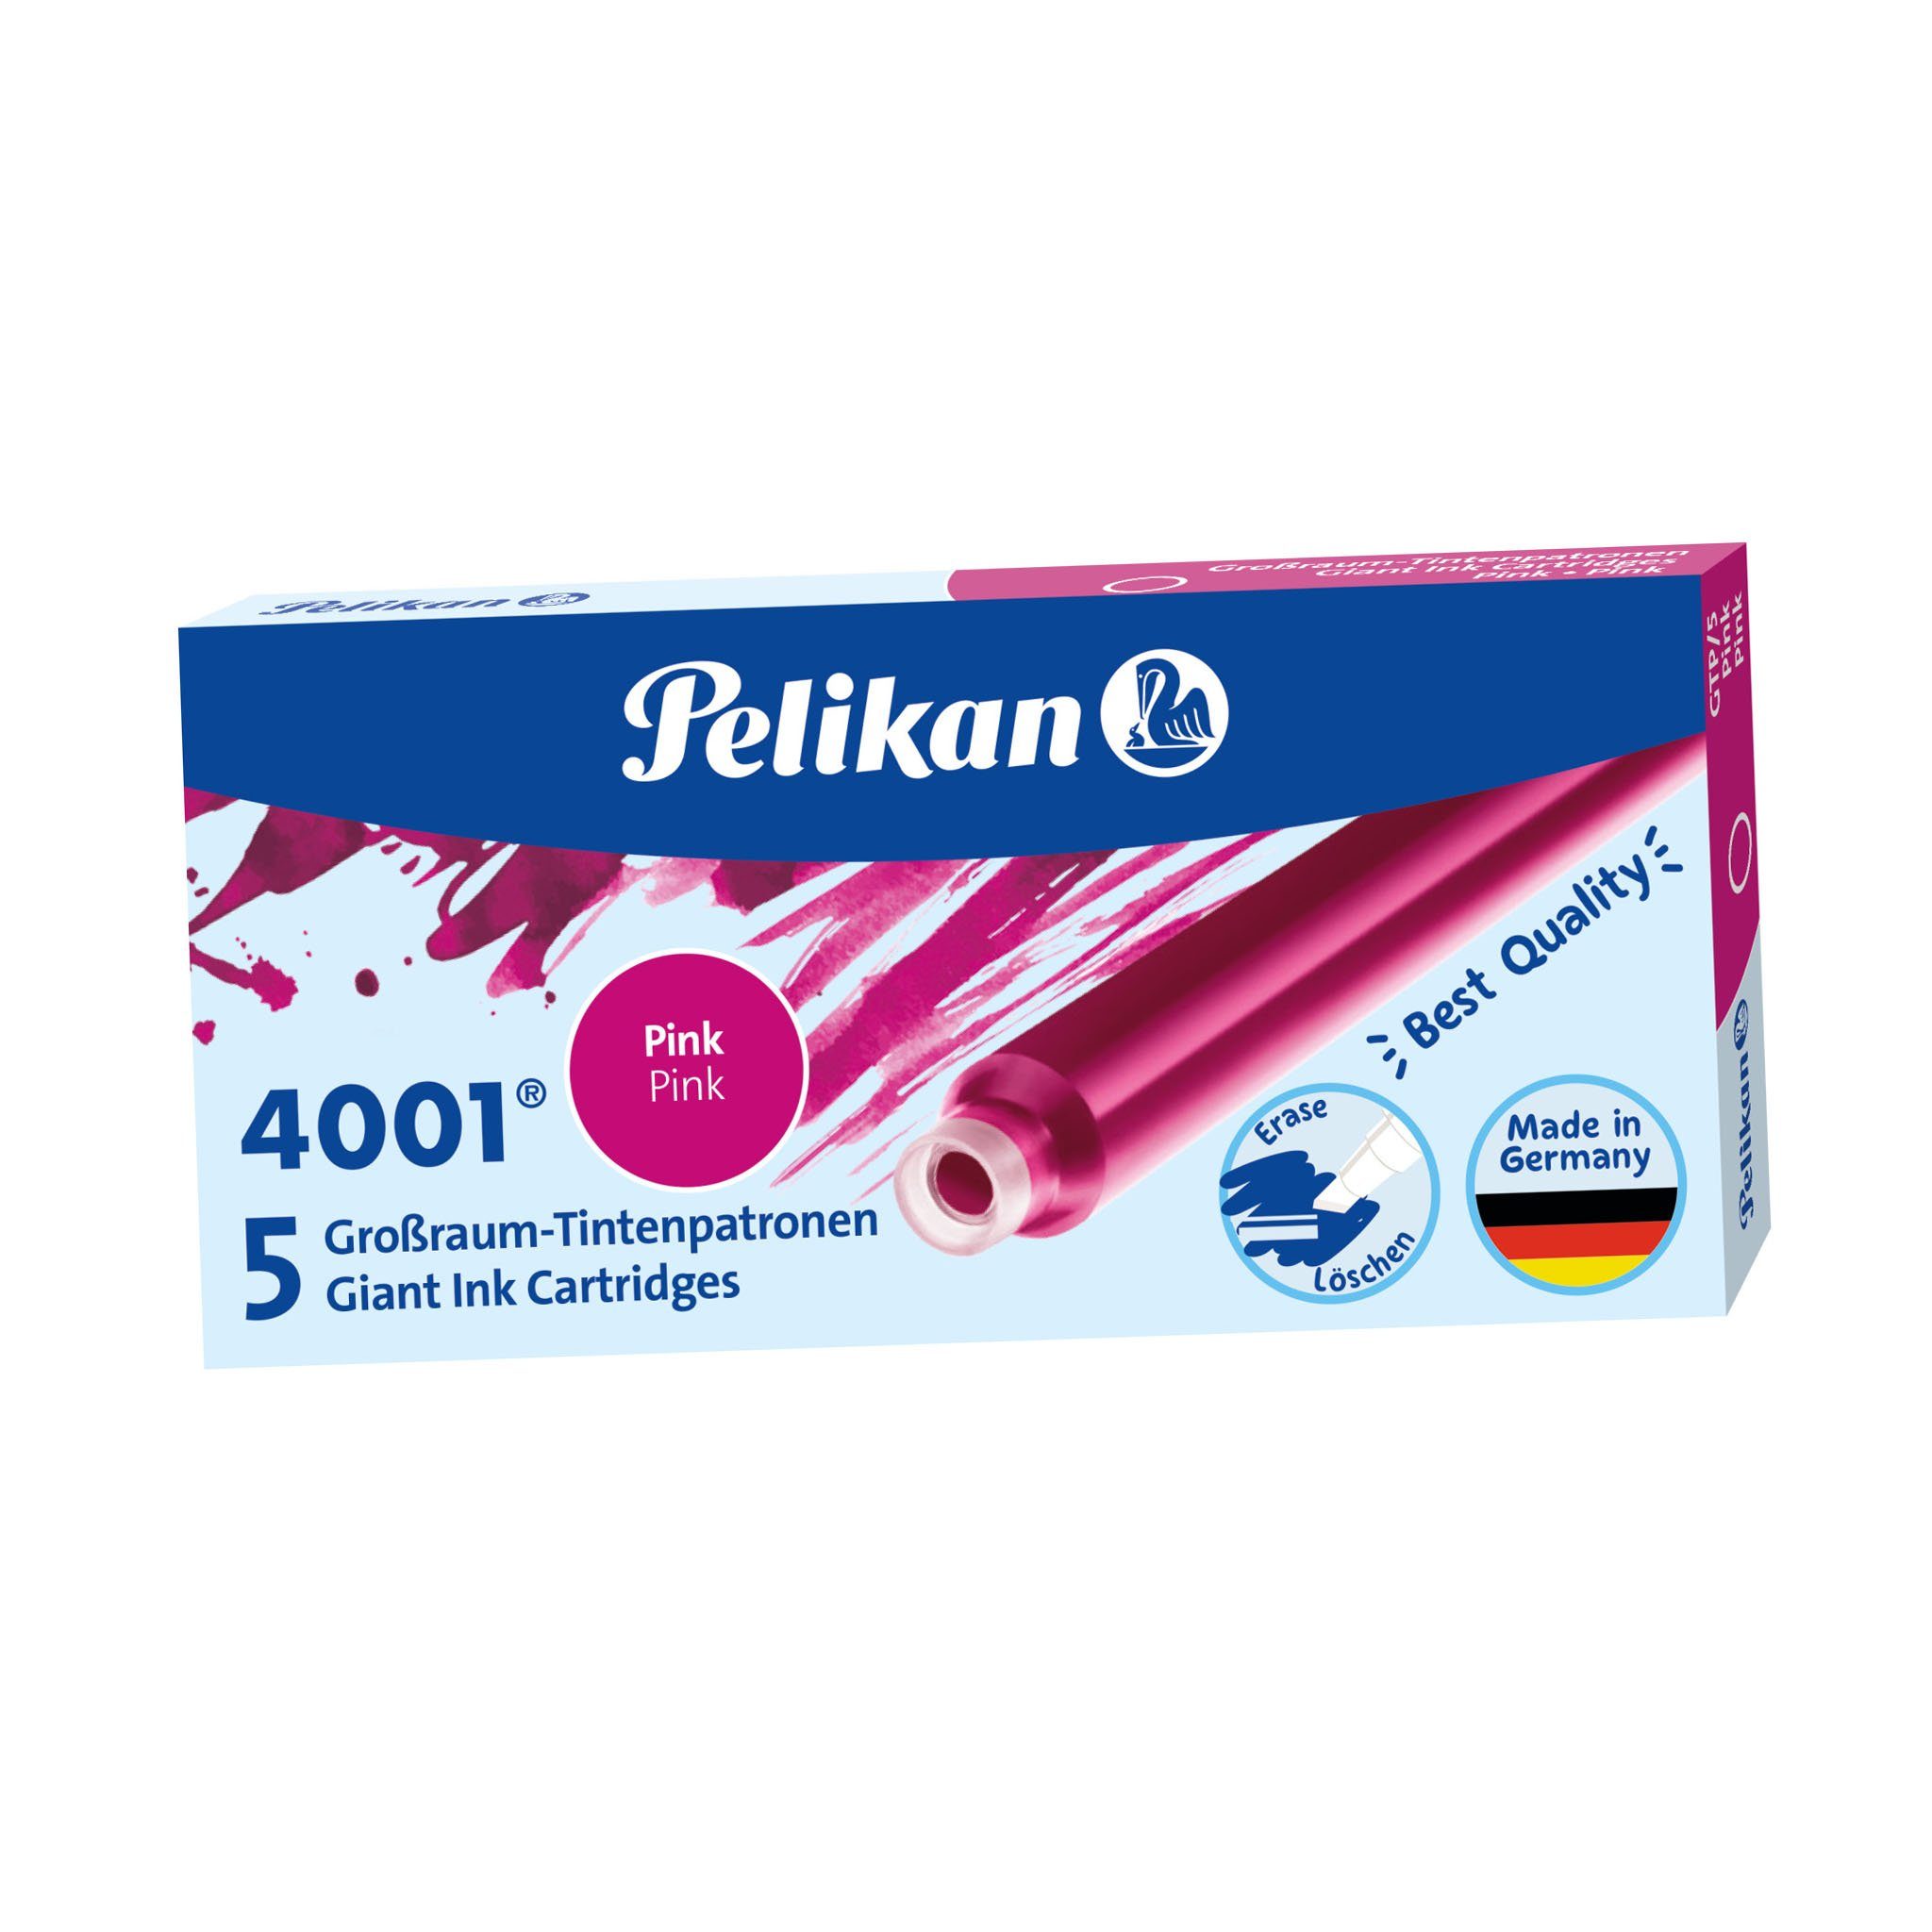 Pelikan Füllfederhalter Pelikan Großraum-Tintenpatronen GTP/5, pink 4001